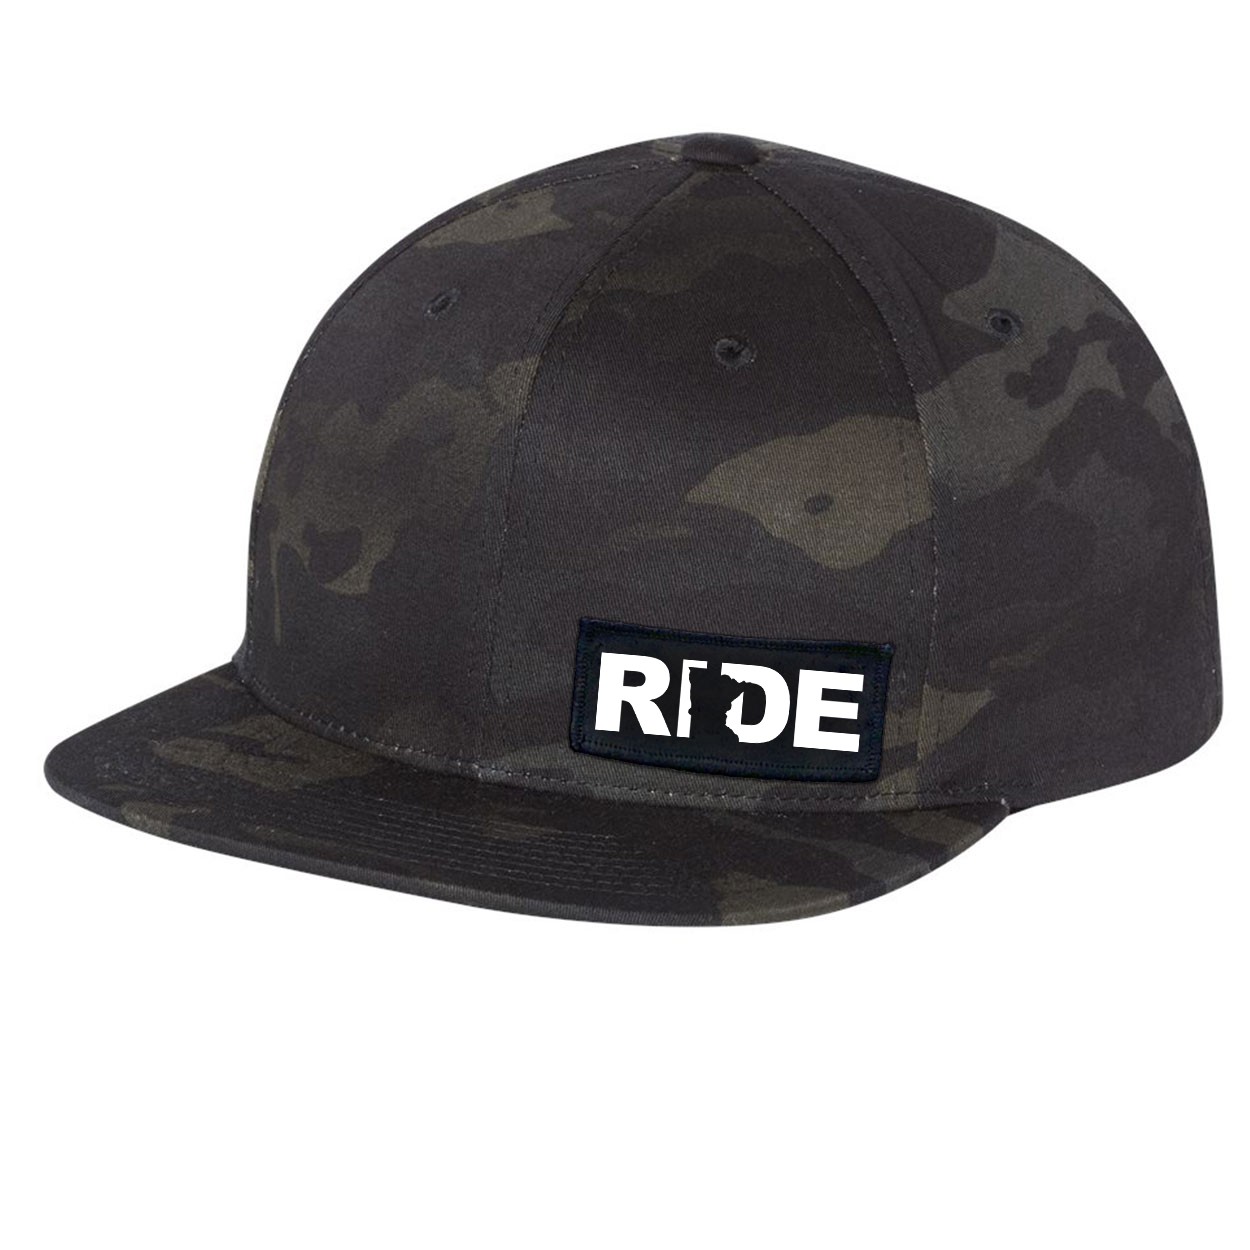 Ride Minnesota Night Out Woven Patch Flat Brim Snapback Hat Black Camo